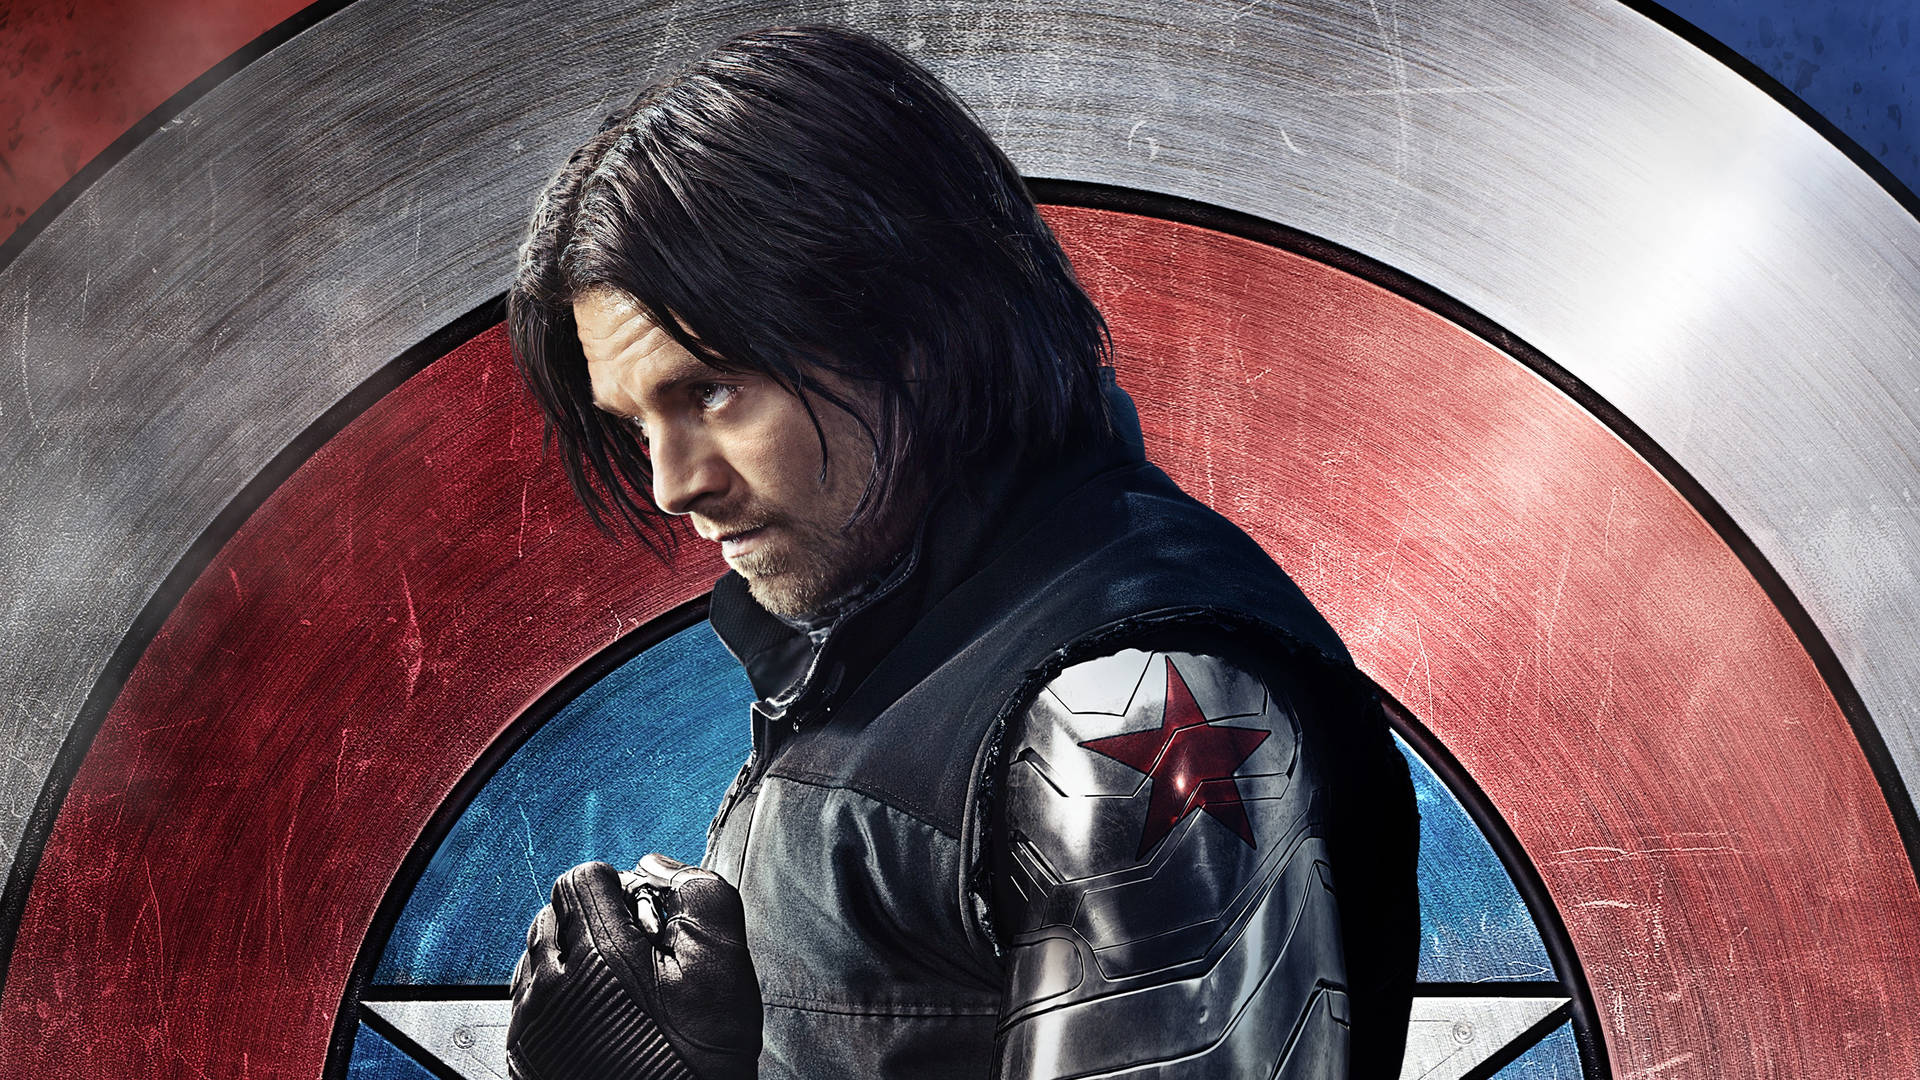 Sebastian Stan Winter Soldier Poster Background